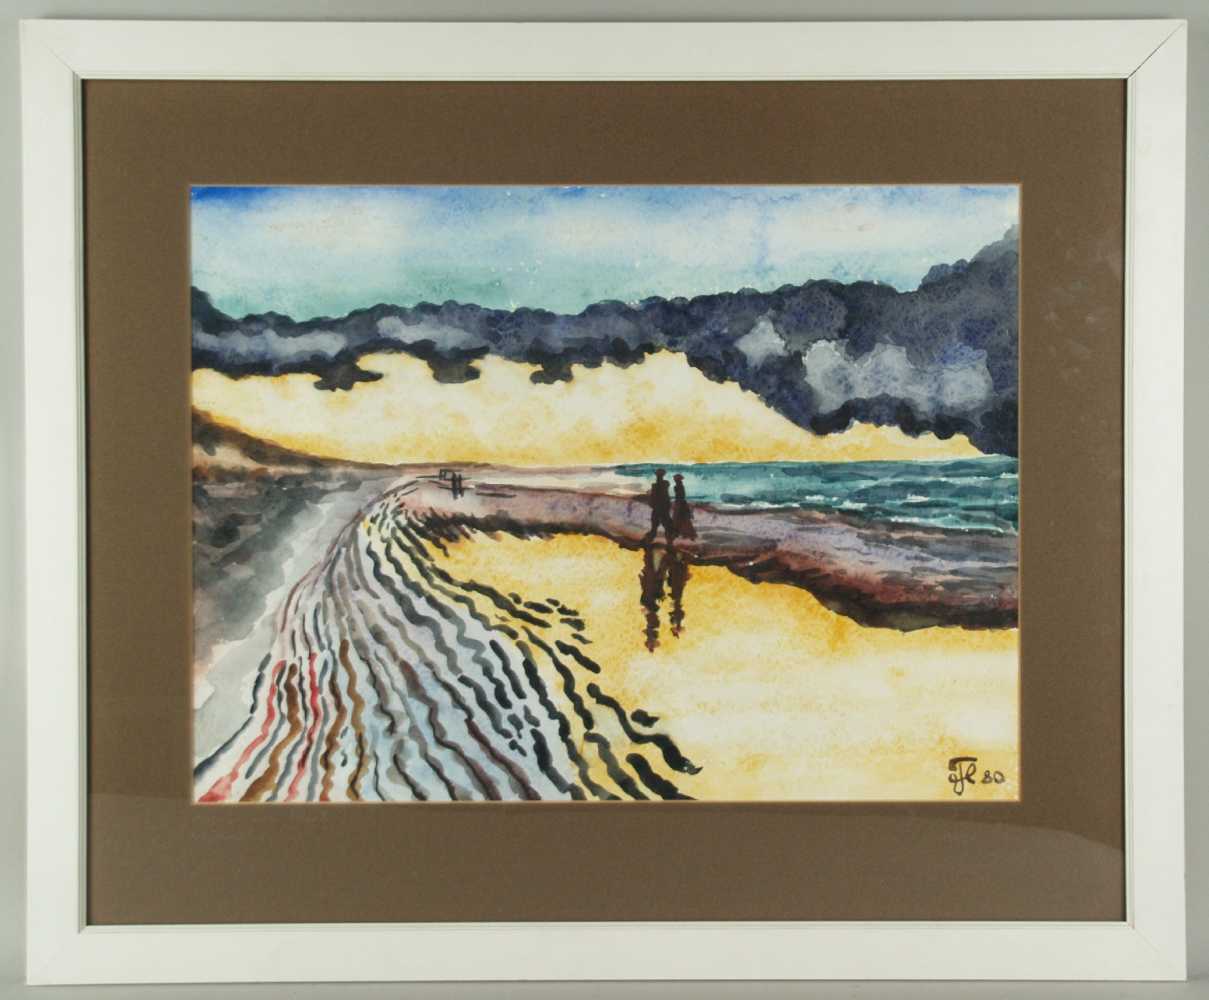 Flieger,Helmut(*1911) - Spaziergänger am Strand in der Abenddämmerung,Aquarell auf Papier,rechts - Image 2 of 3